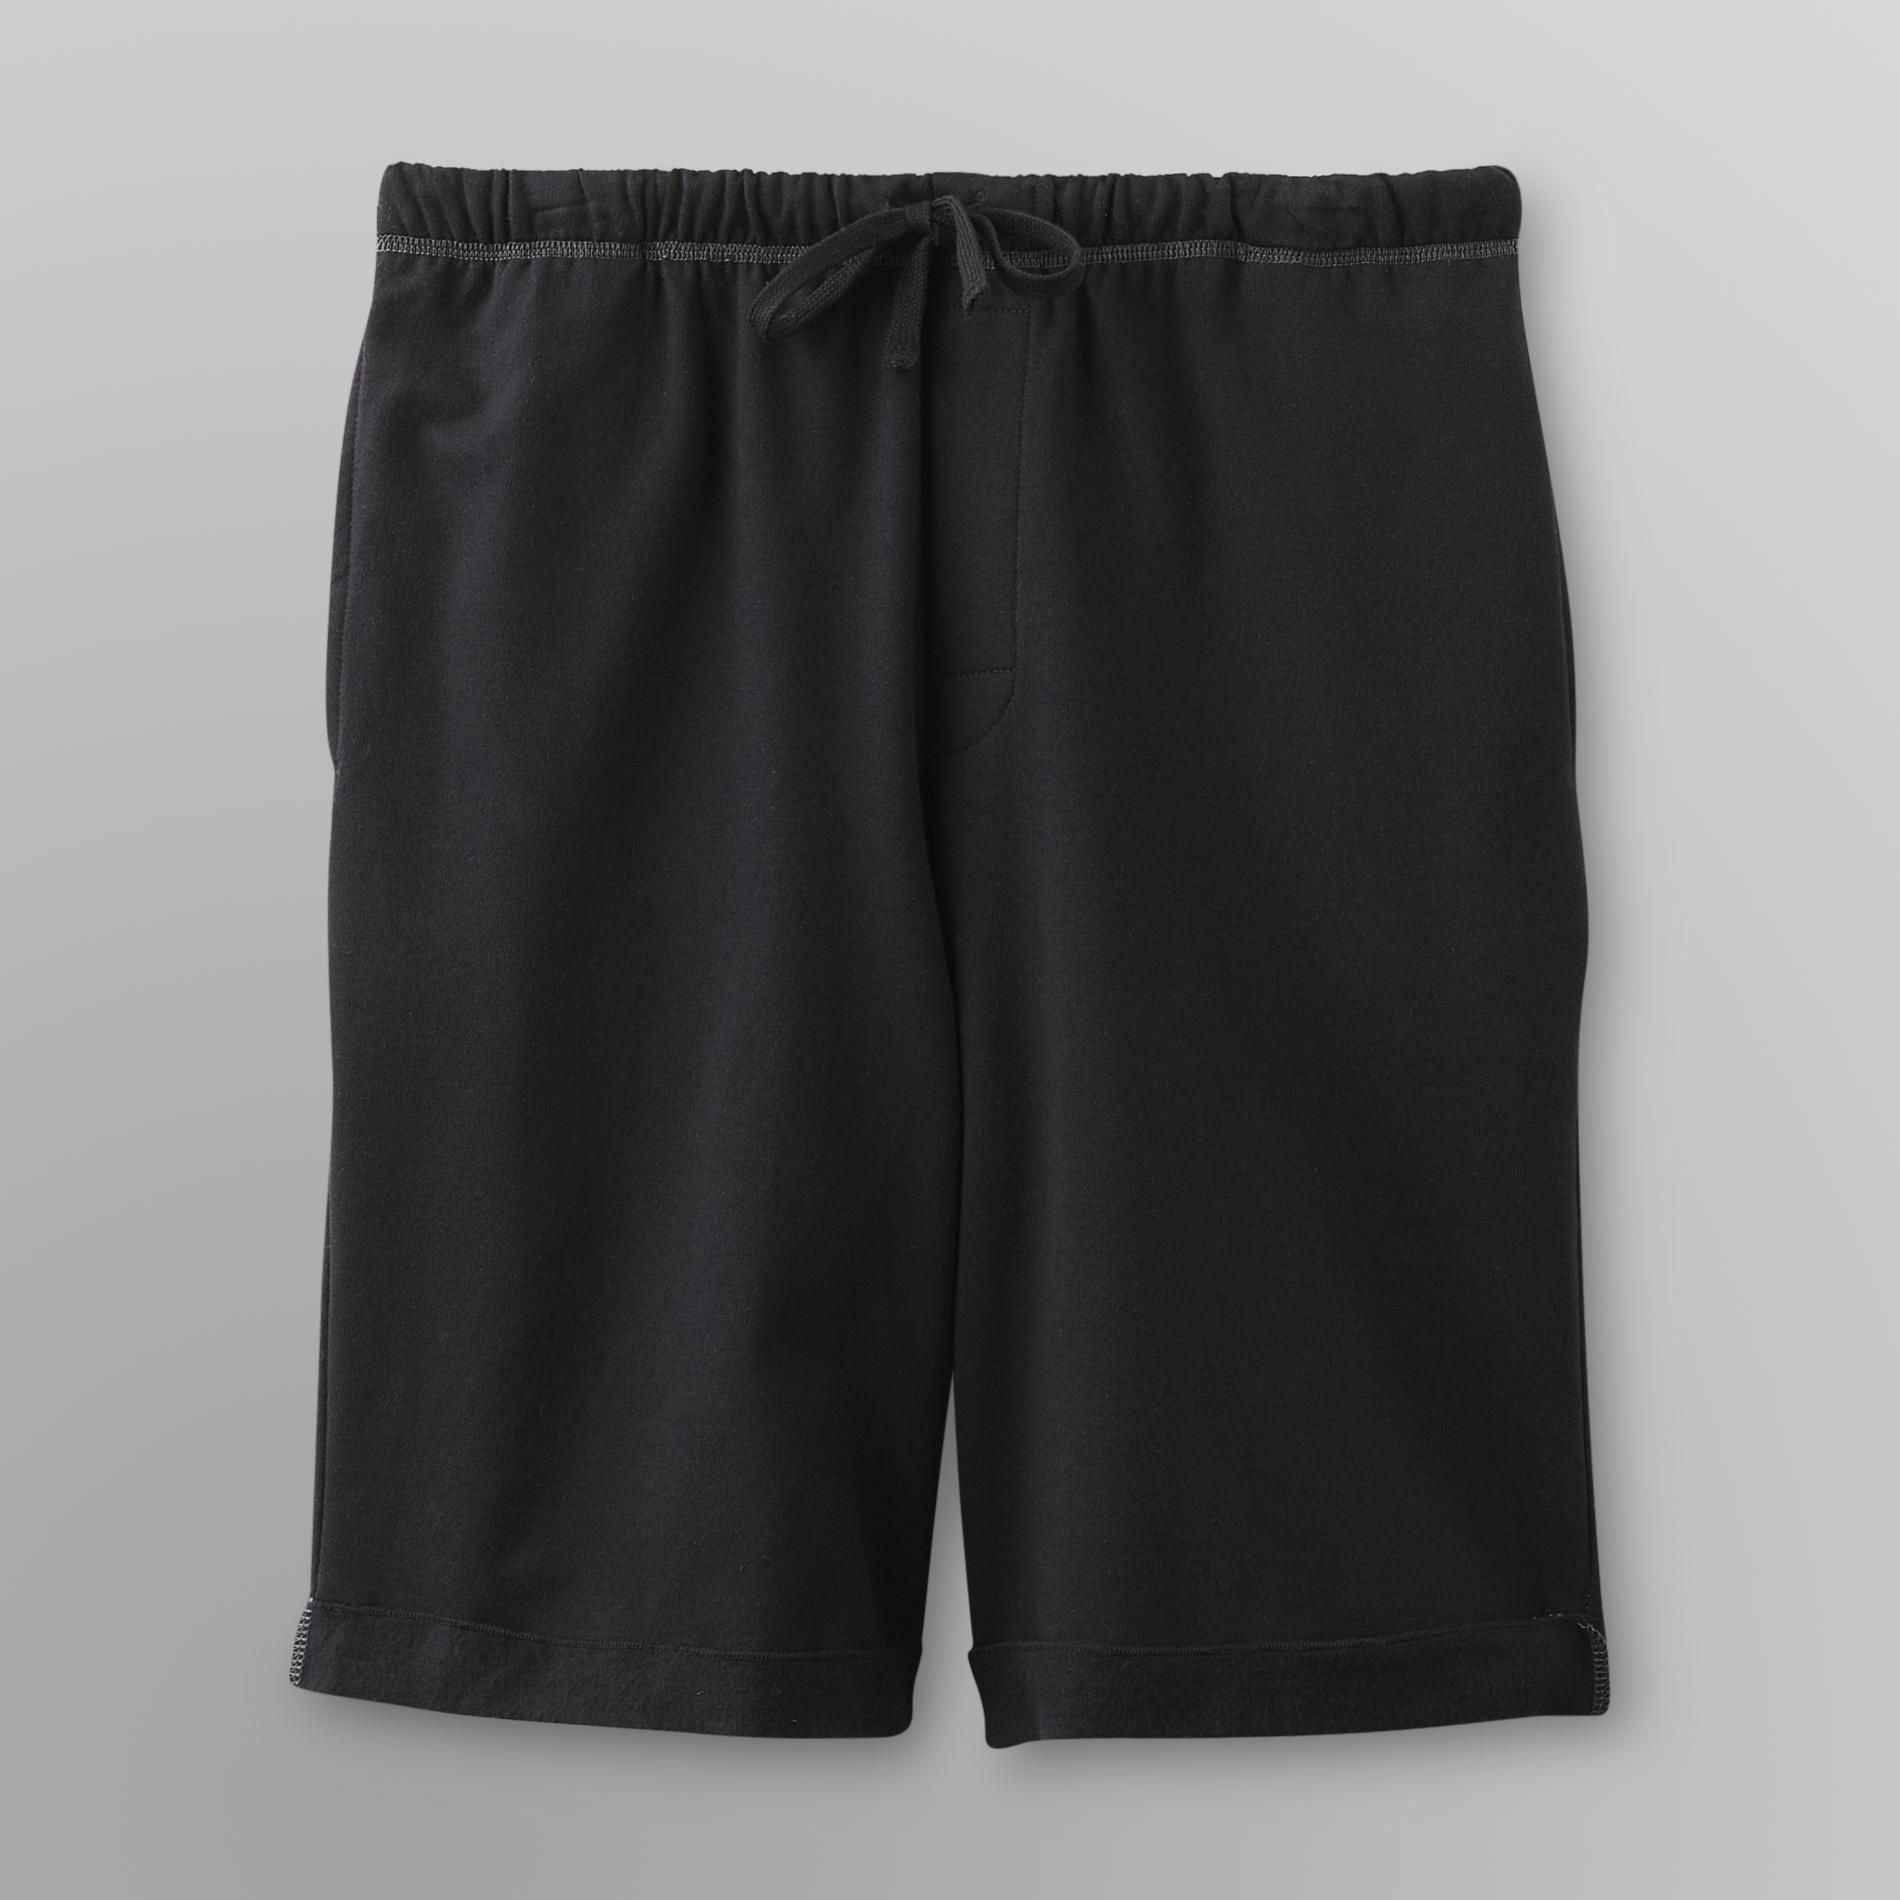 Joe Boxer Men's Knit Athletic Shorts